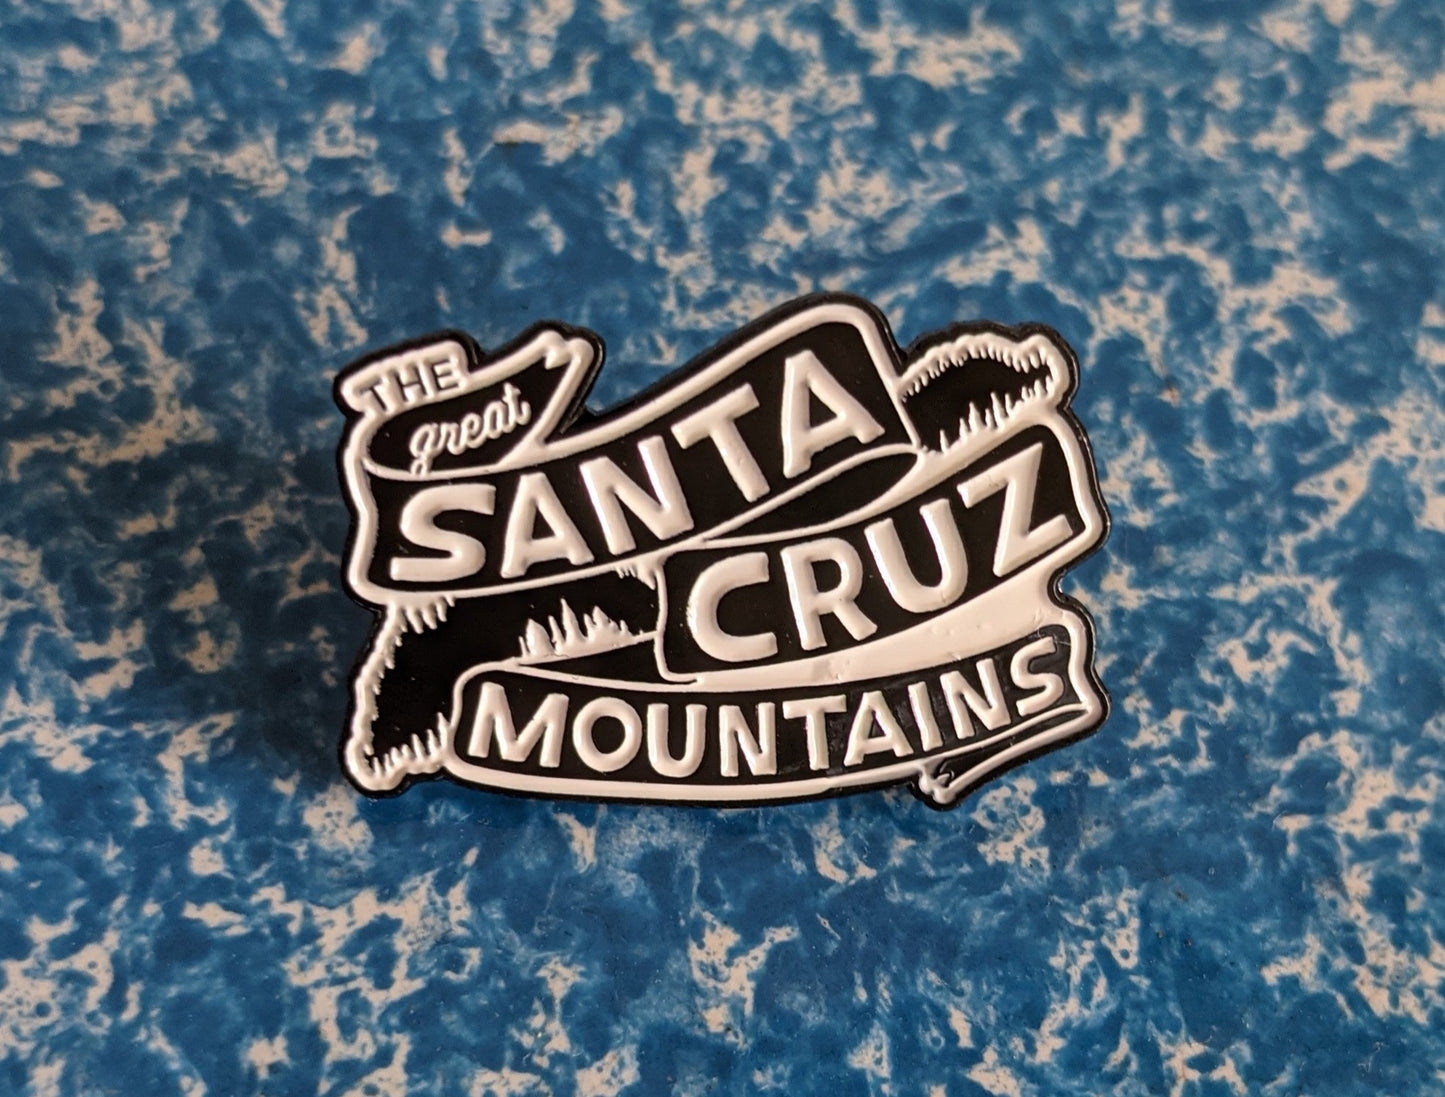 White and black soft enamel pin with Great Santa Cruz Mountains banner logo design